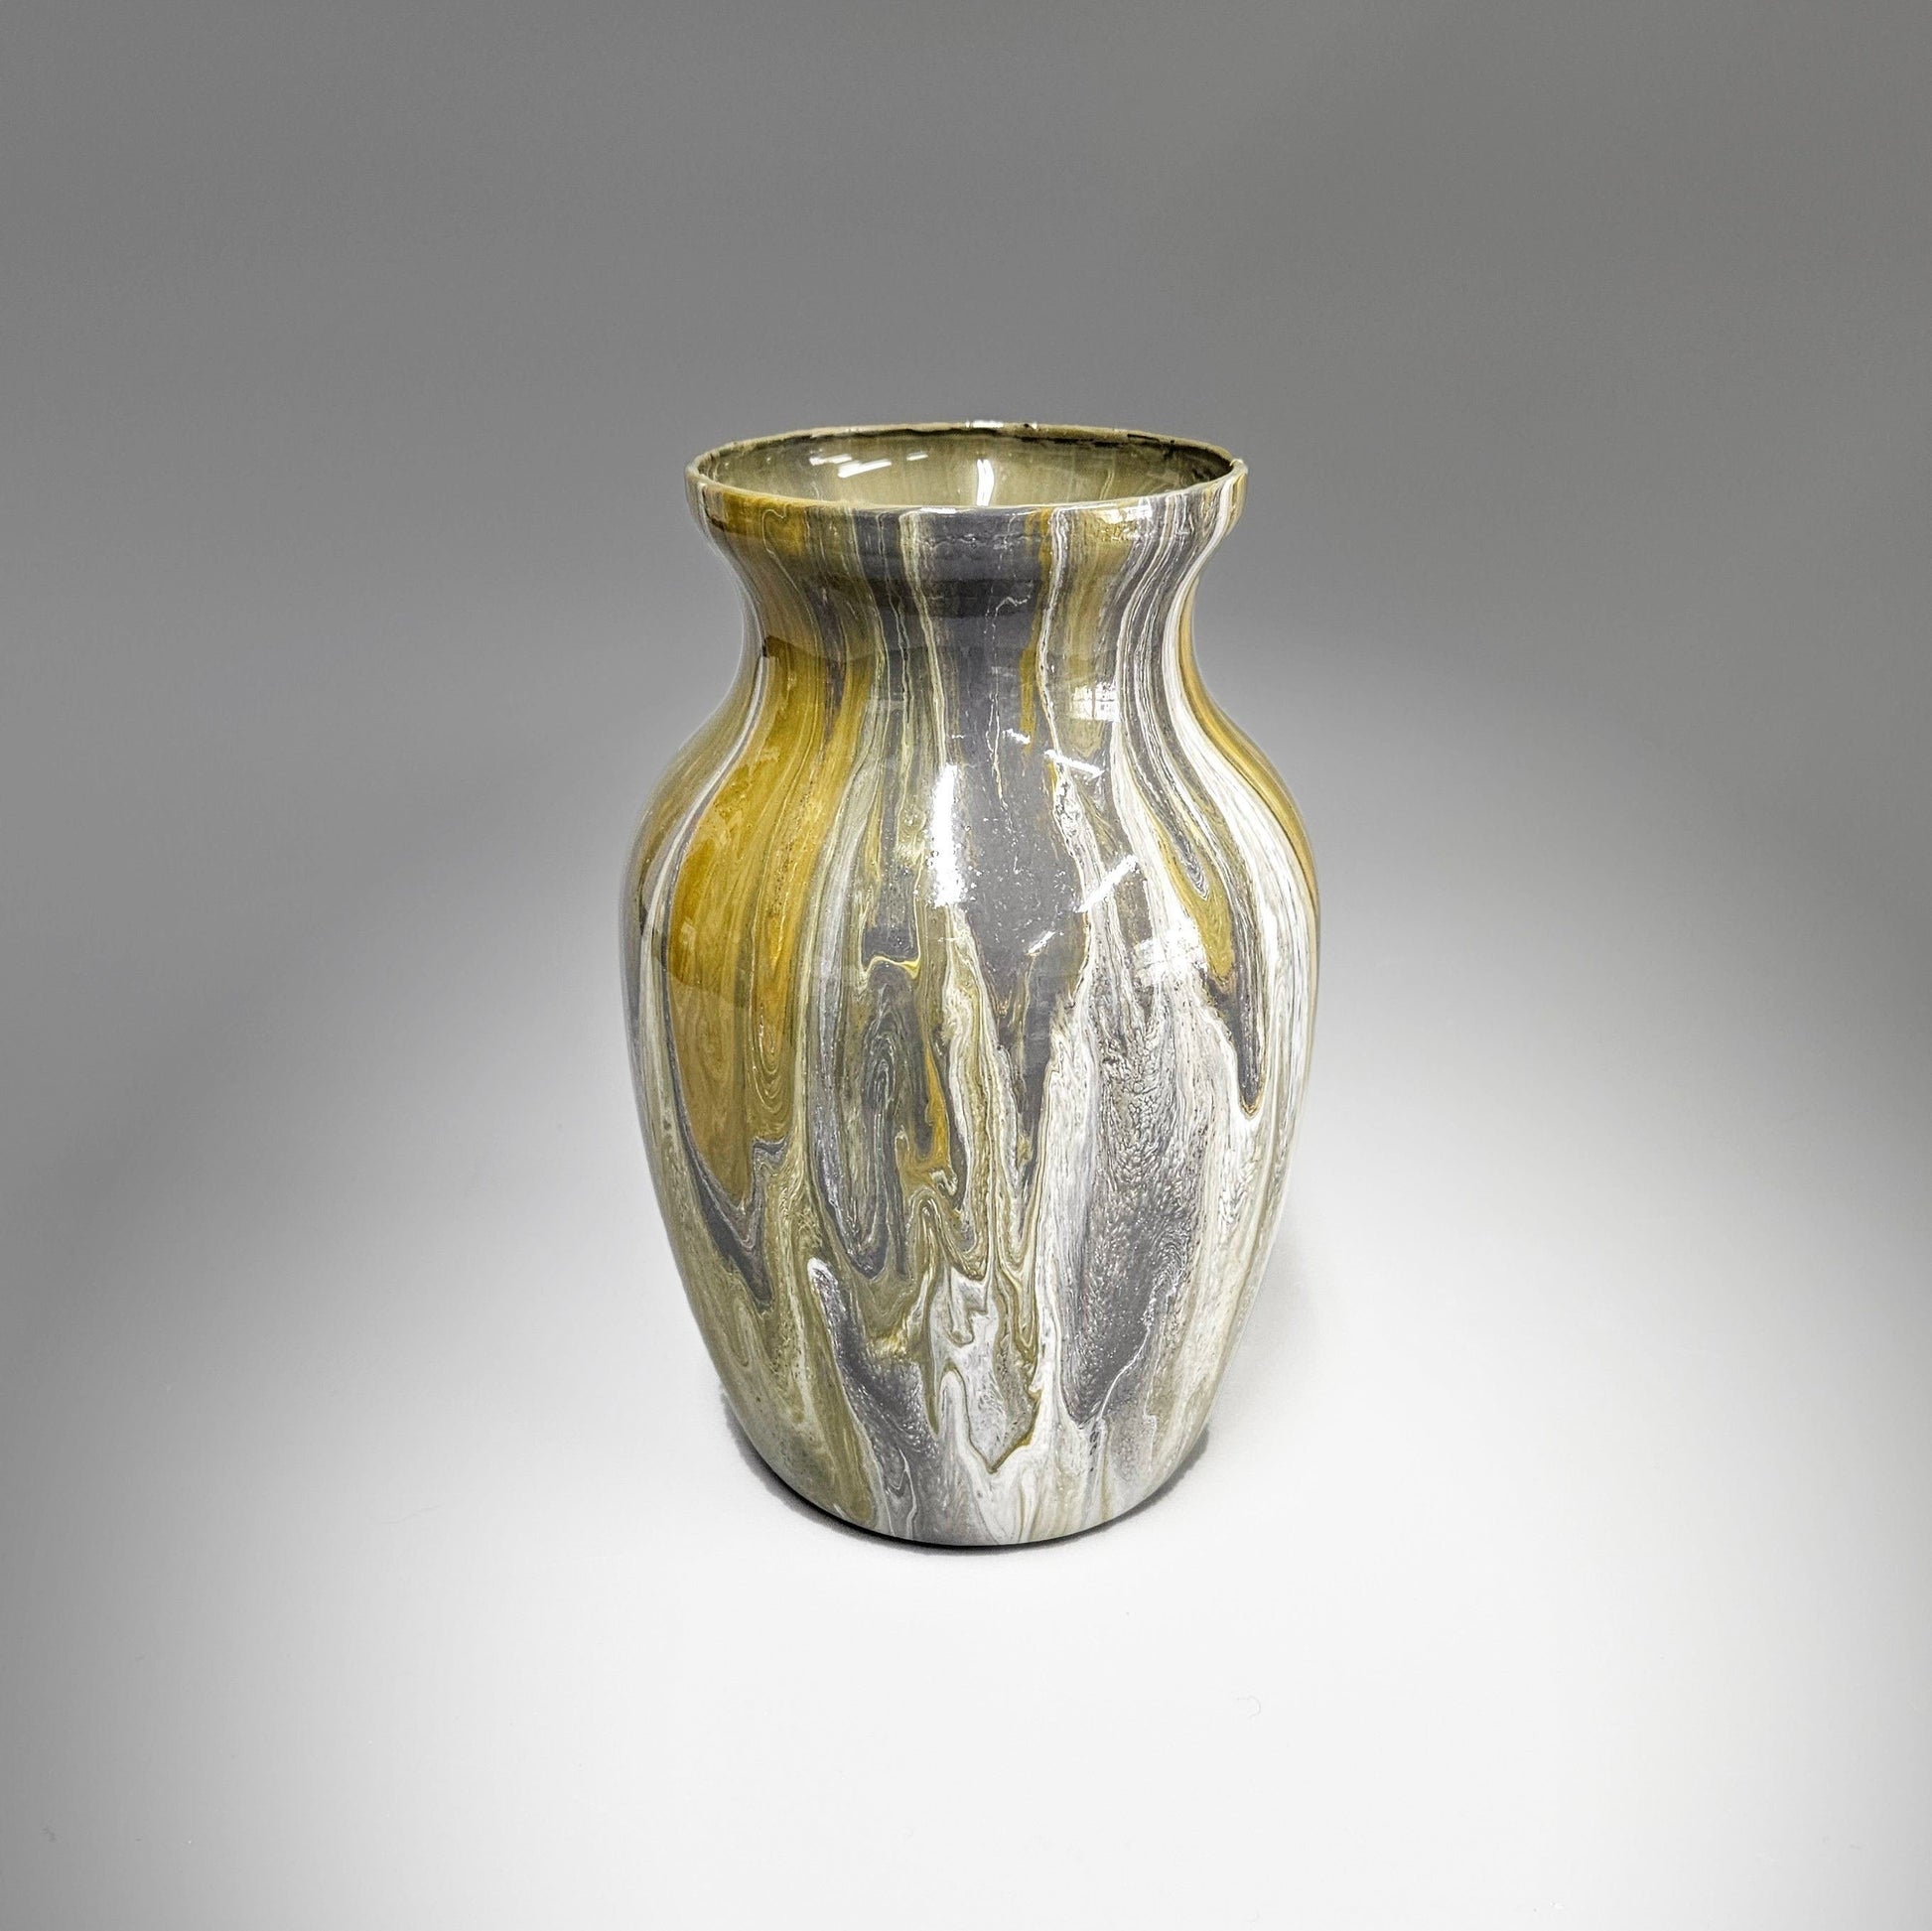 Glass Art Painted Vase in Tan, White and Gray | Fluid Art Glass Vase